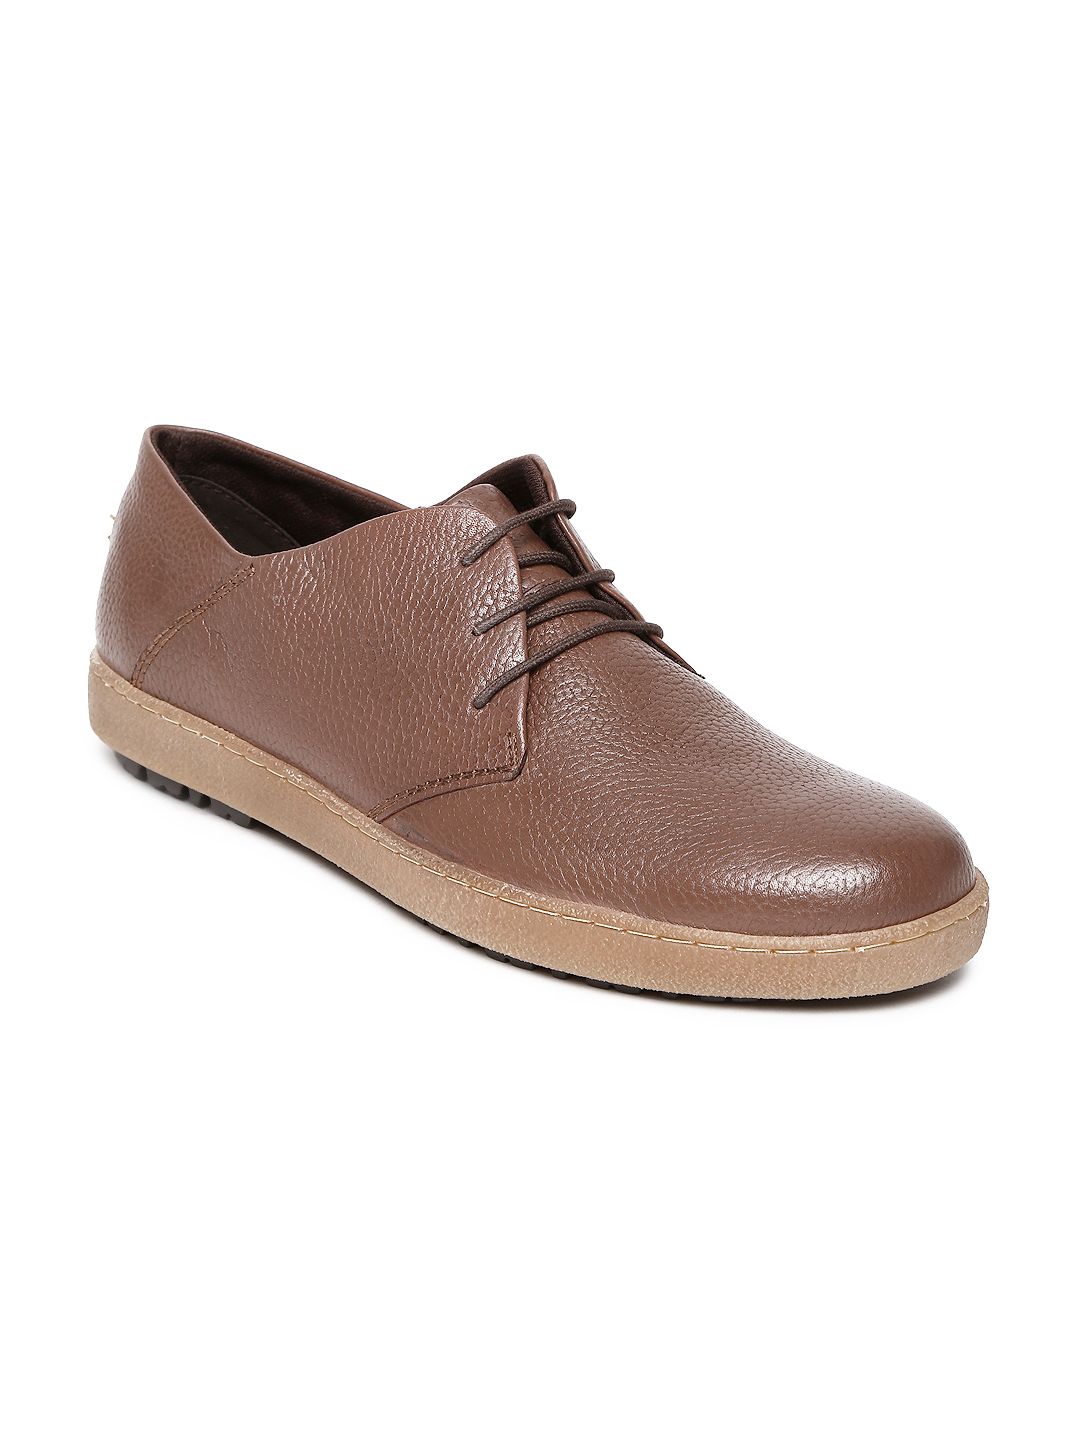 Buy Allen Solly Men Brown Leather Casual Shoes - 632 - Footwear for Men ...